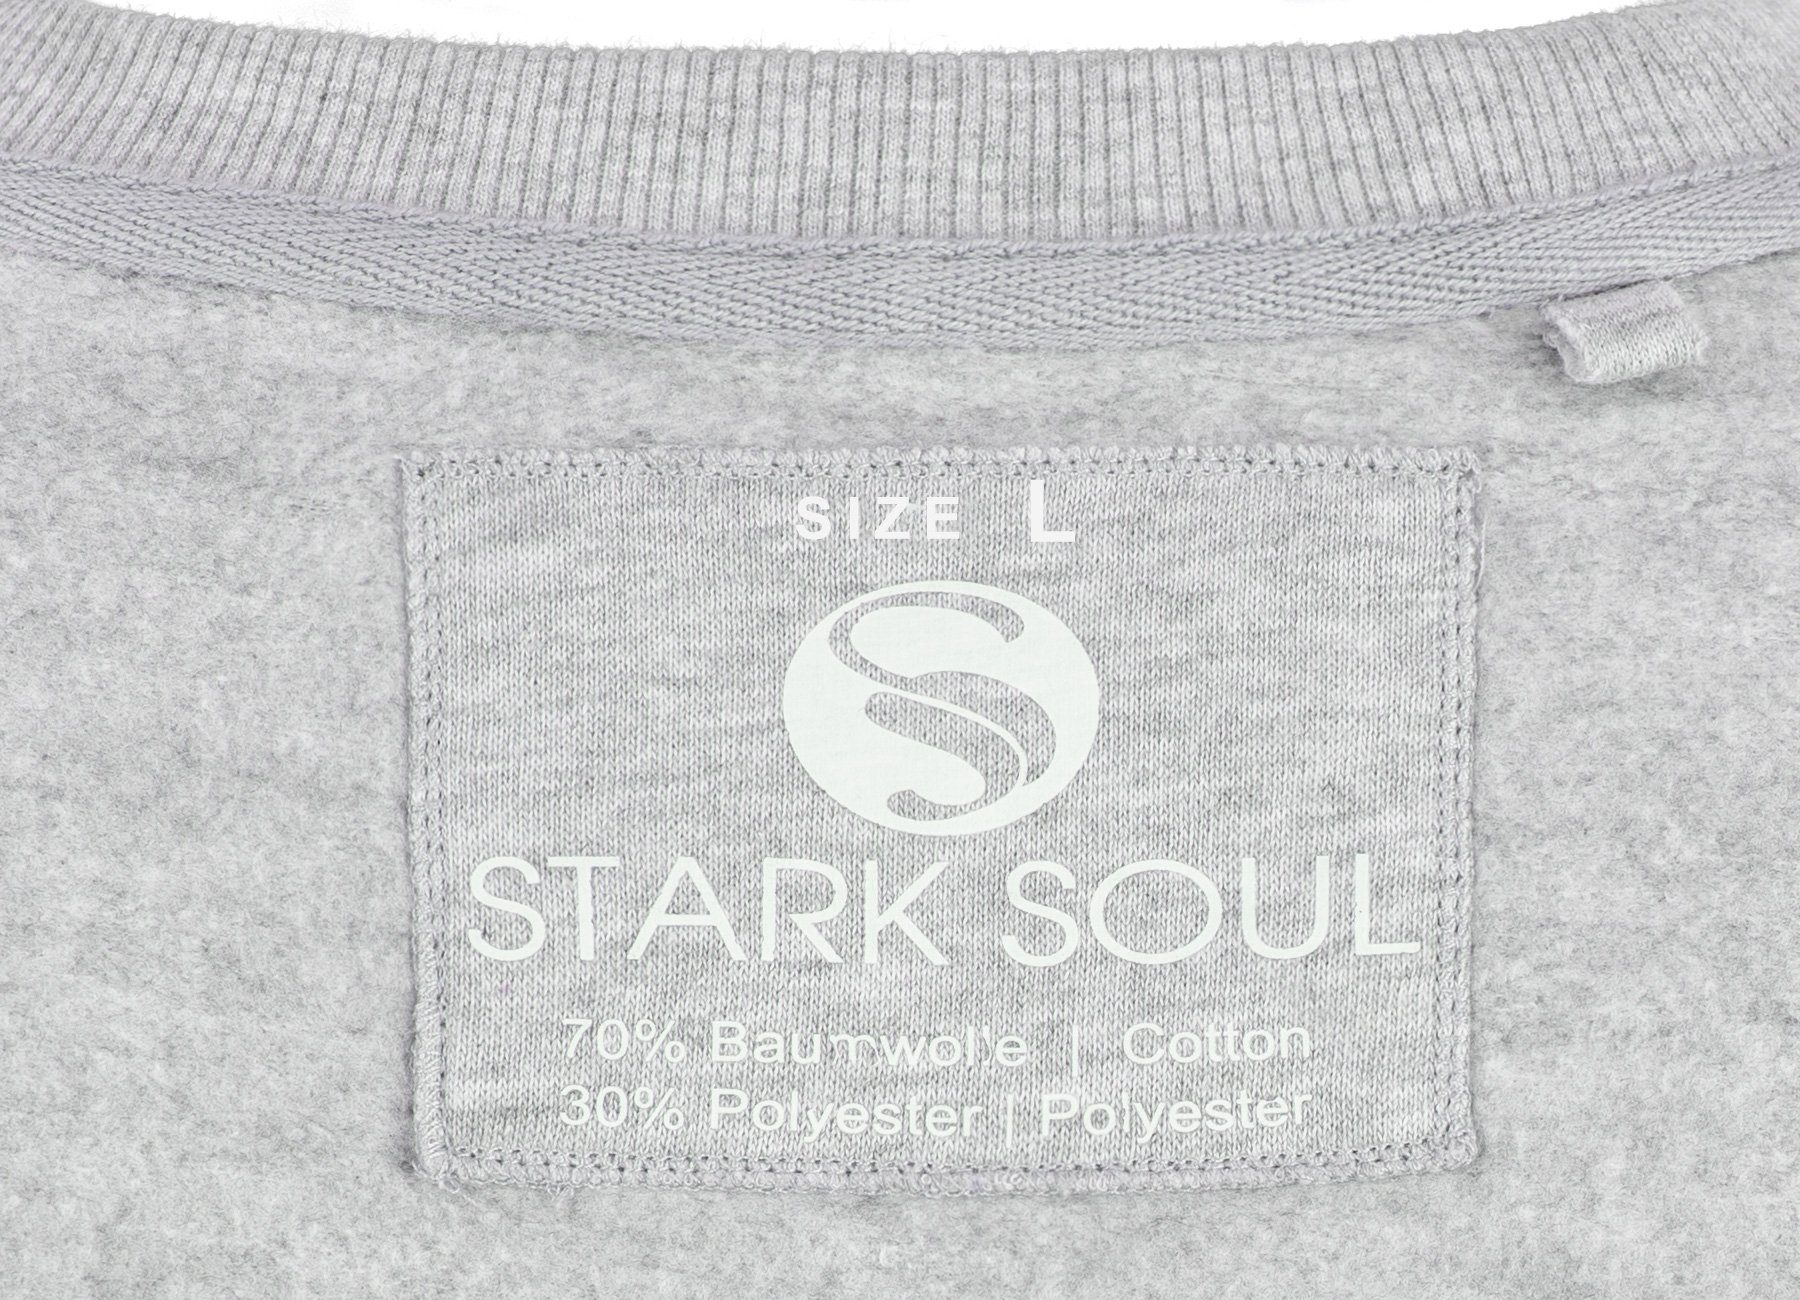 Stark Soul "College" Soul® Unisex Stark Sweatshirt Sweatshirt Rundhals-Sweater Grau-Melange